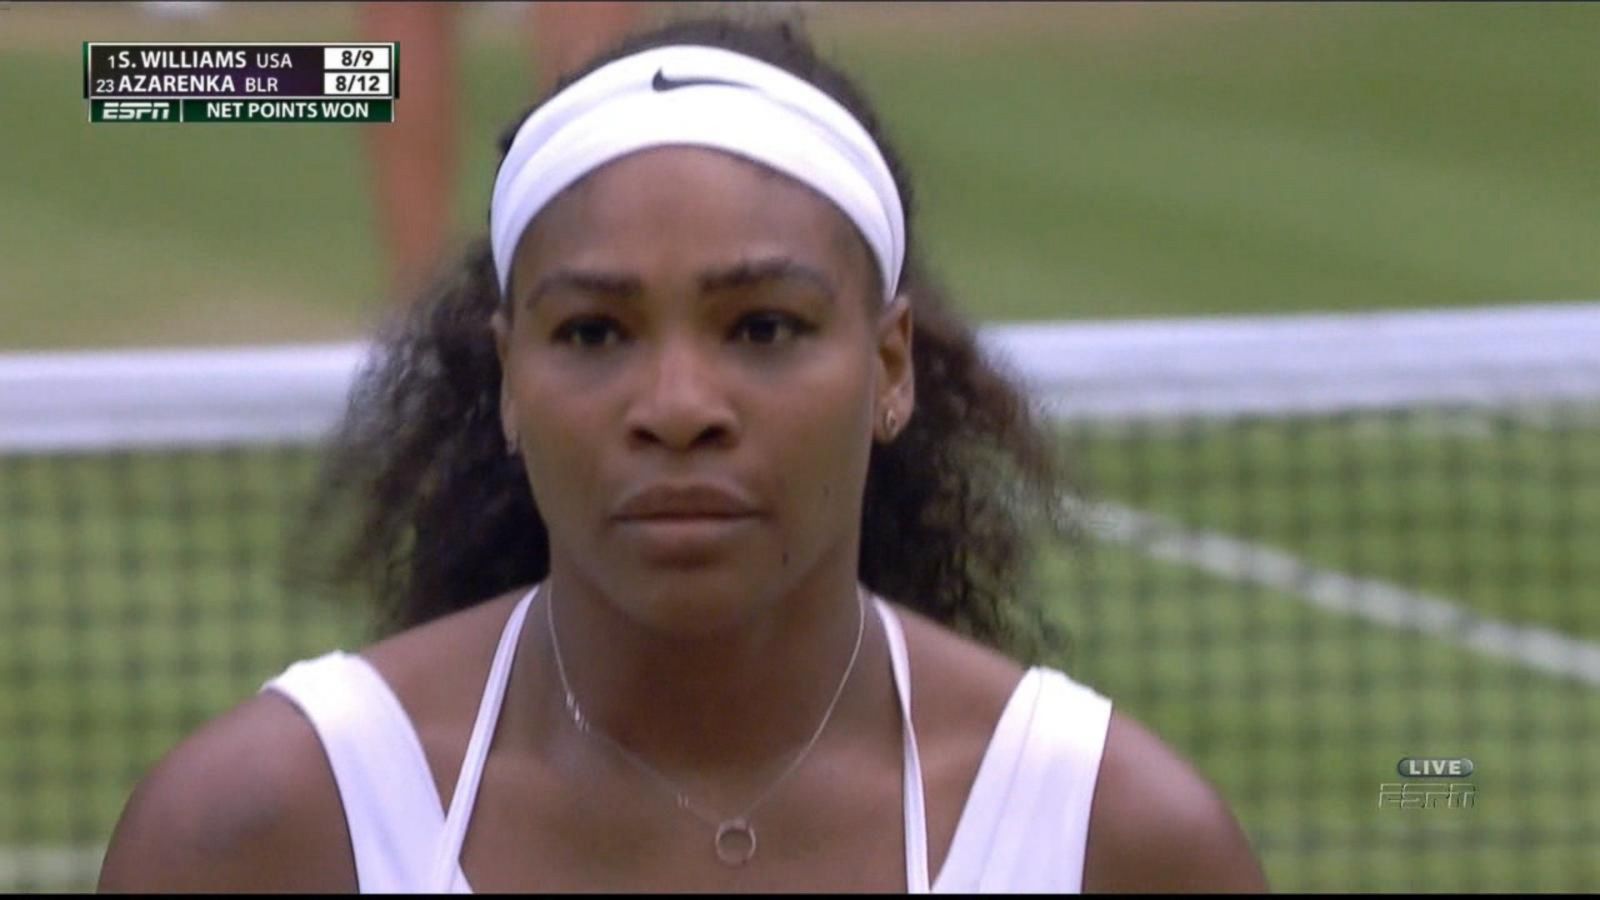 Serena Williams Wimbledon Fans See Fantastic Tennis but Hear Loud Grunts